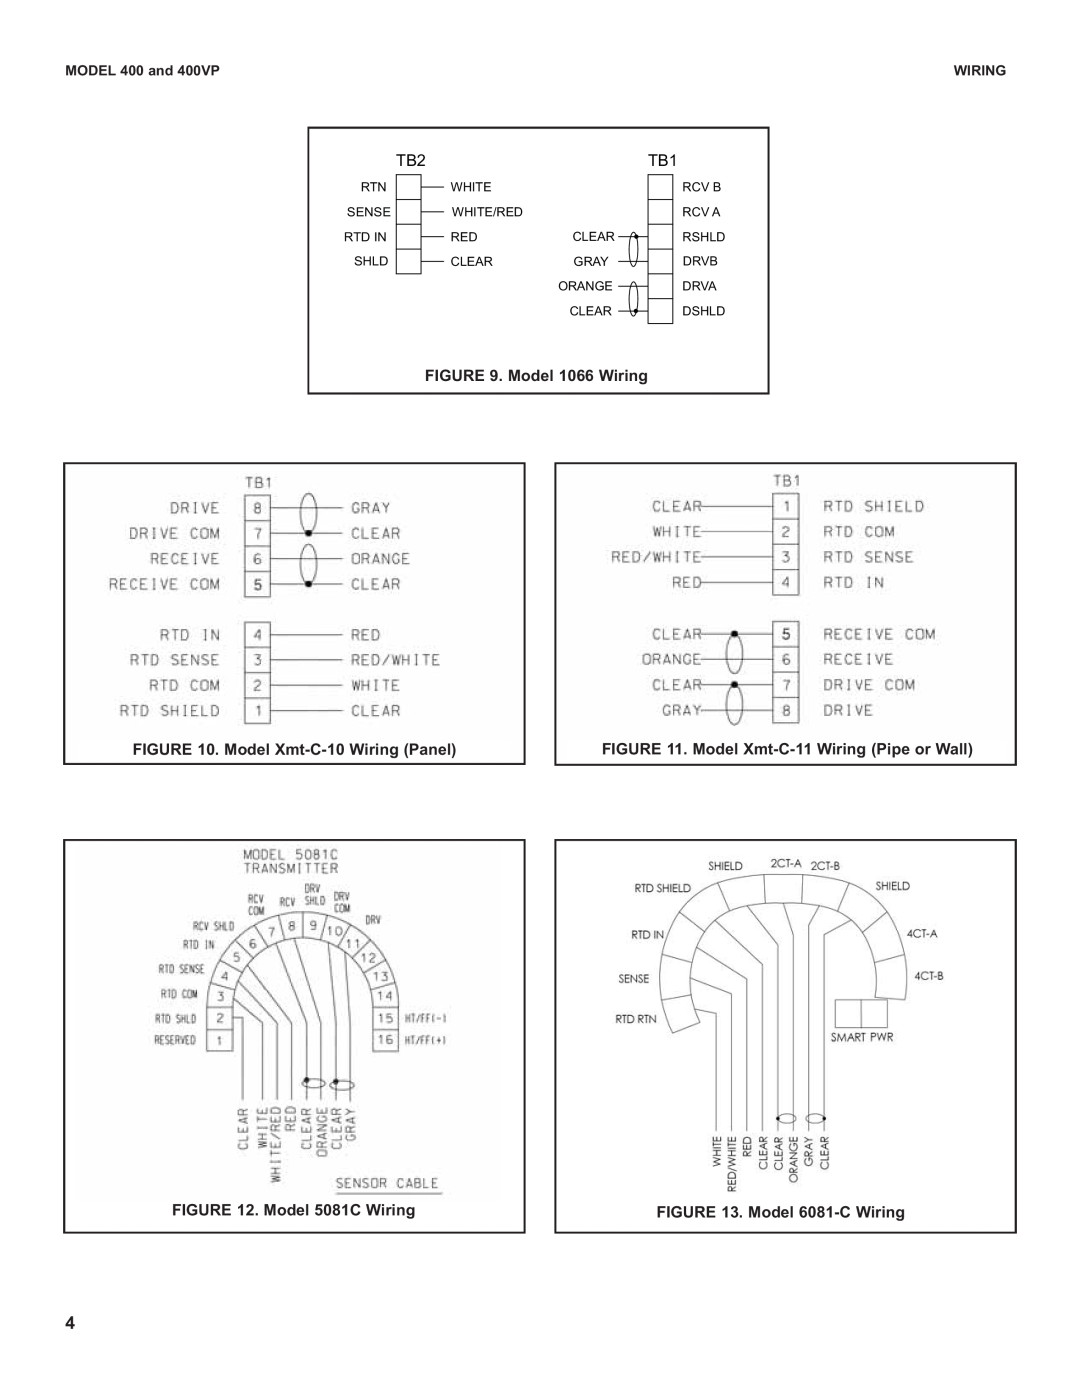 Emerson 400 VP Model 1066 Wiring, Model Xmt-C-10Wiring Panel, Model Xmt-C-11Wiring Pipe or Wall, Model 5081C Wiring 